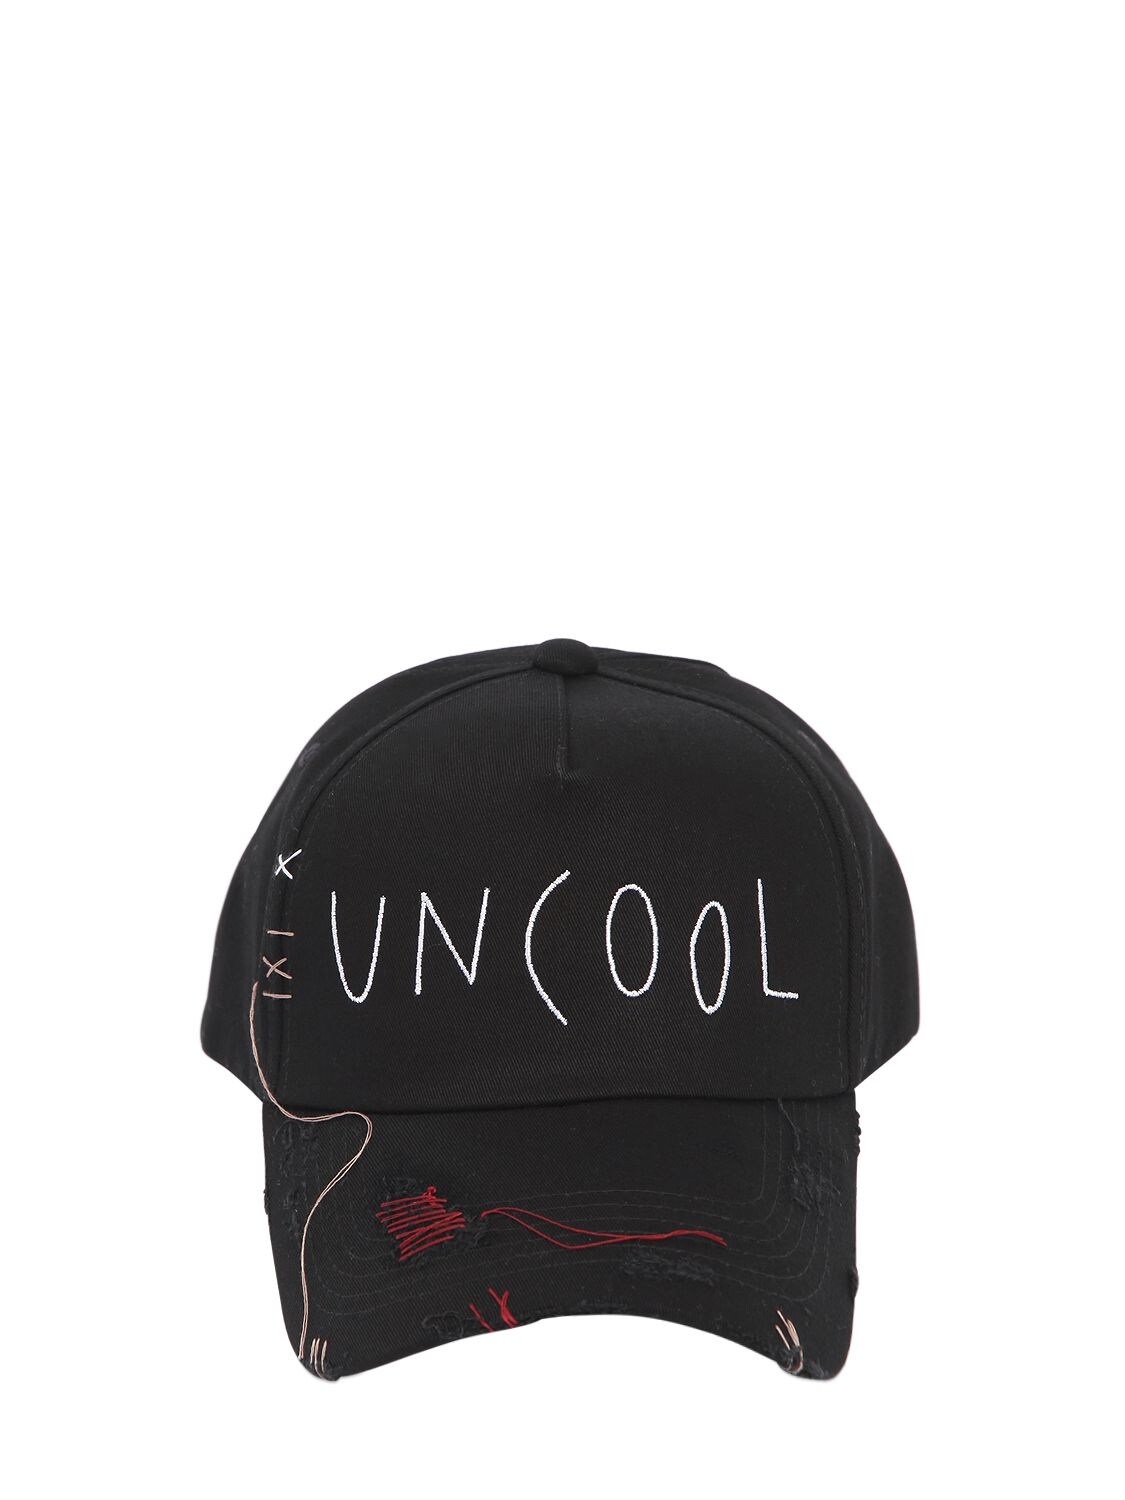 Azs Tokyo Uncool Distressed Baseball Hat In Black